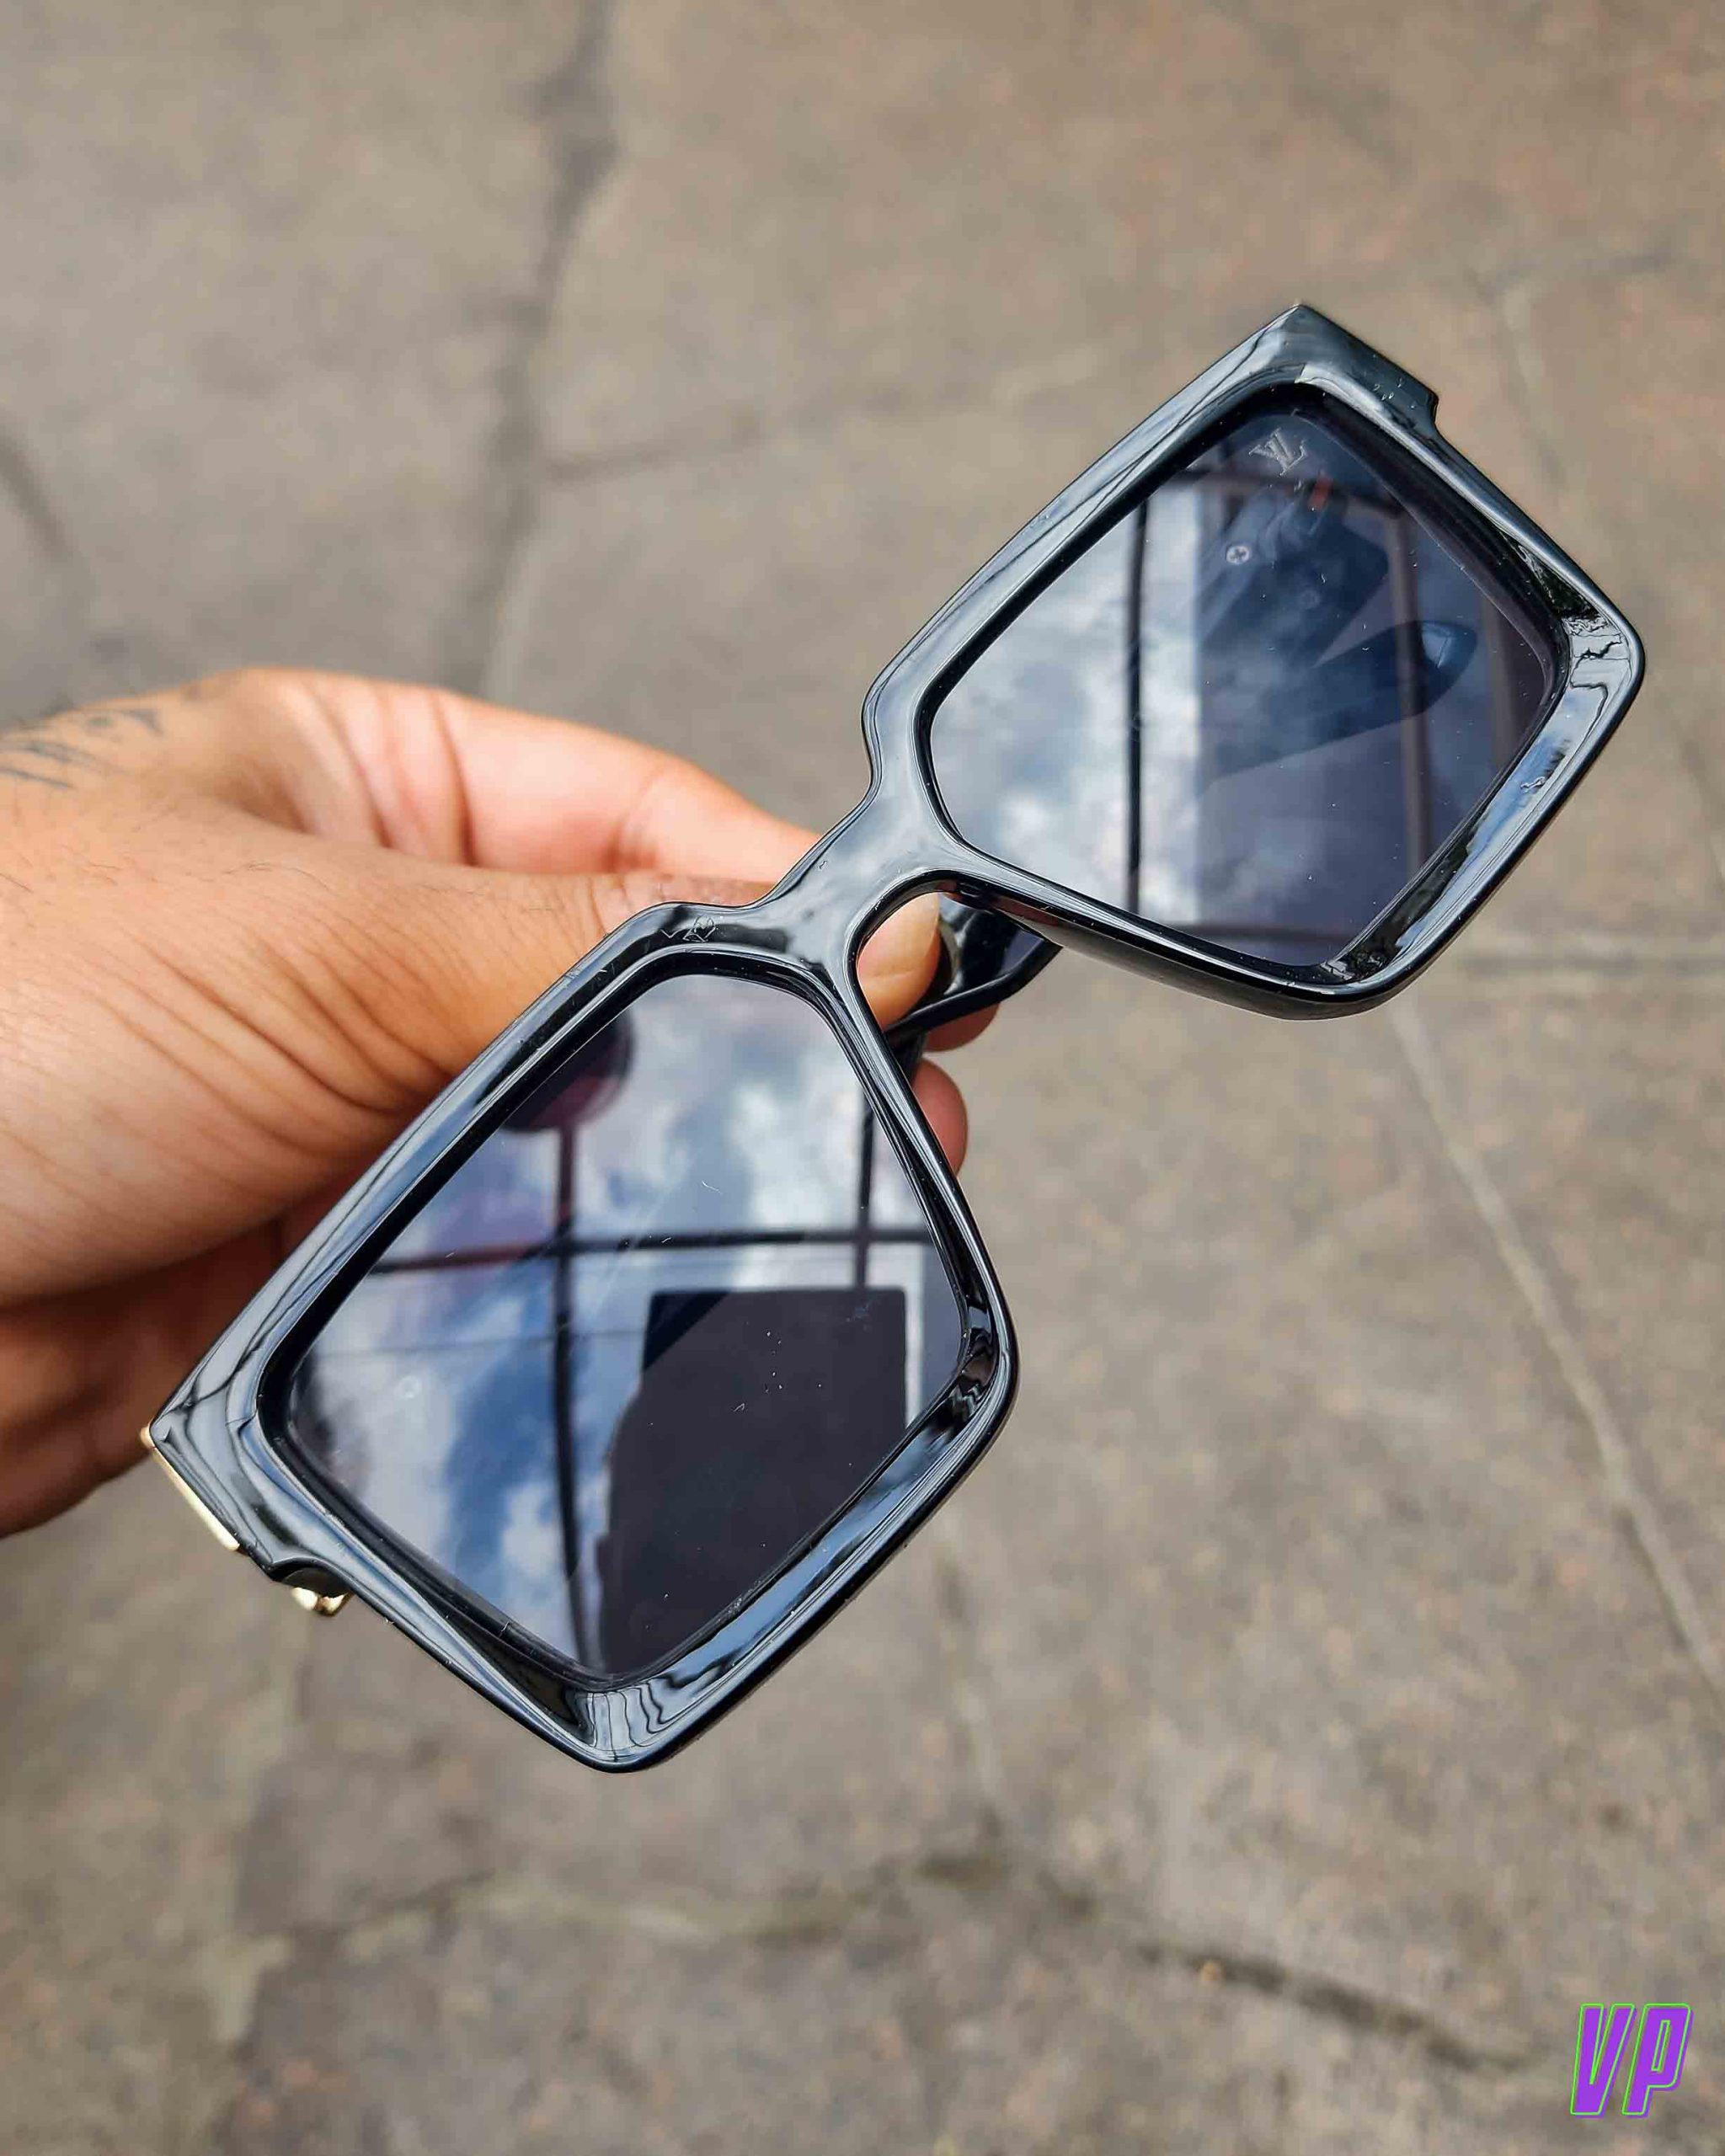 Louis Vuitton LV Clash Square Sunglasses